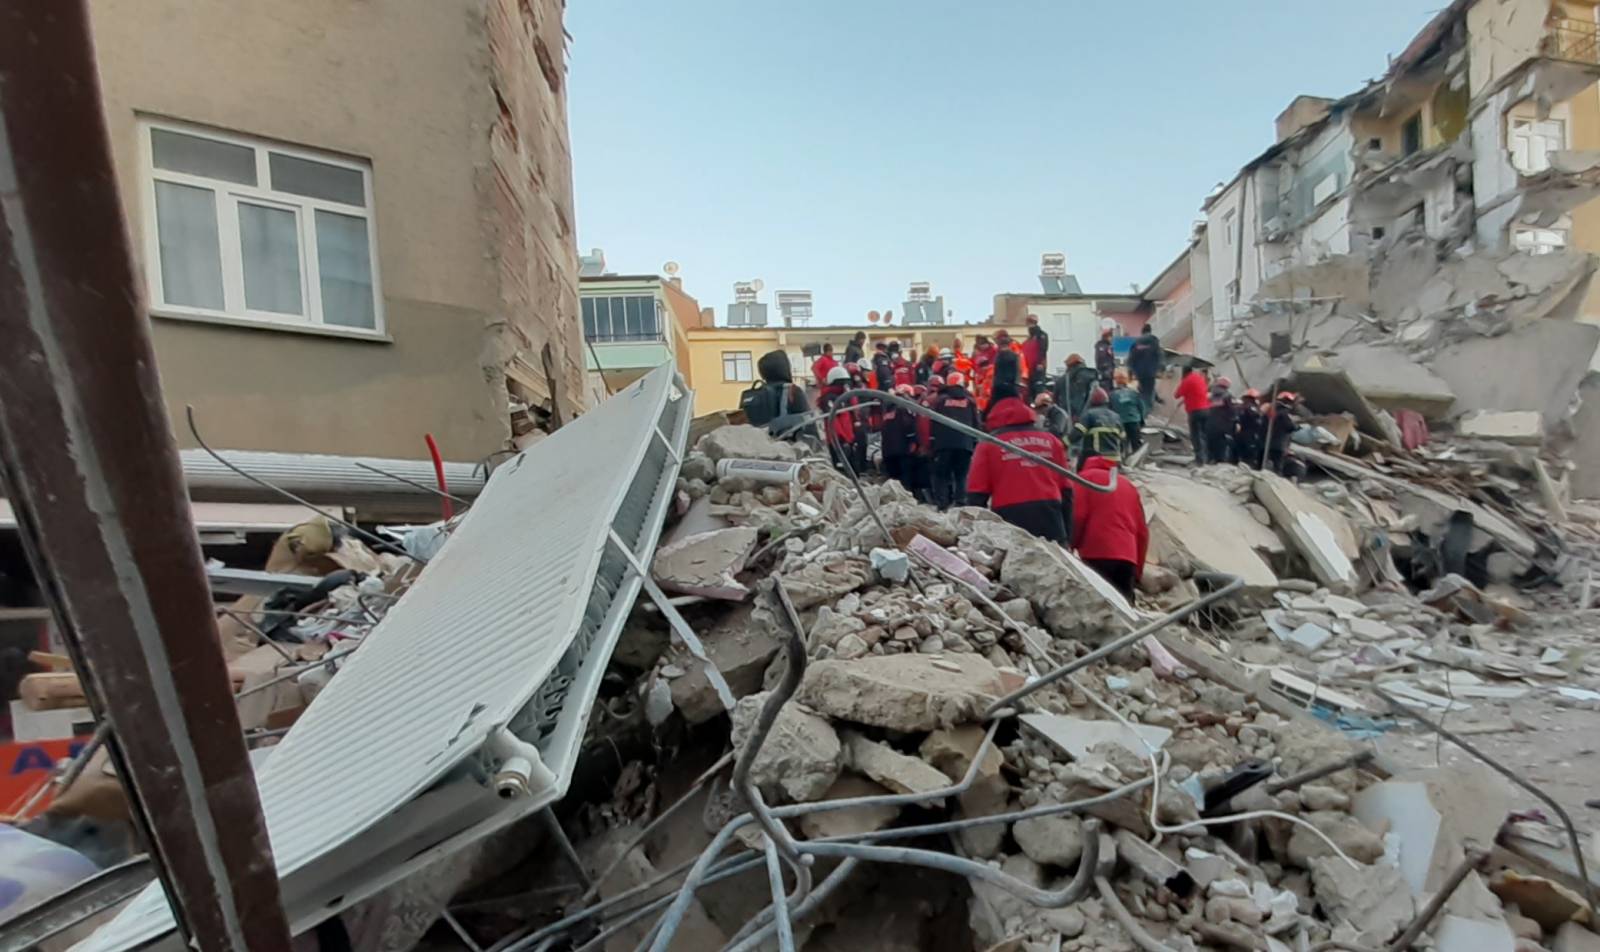 ISU victime daramaturi cutremur